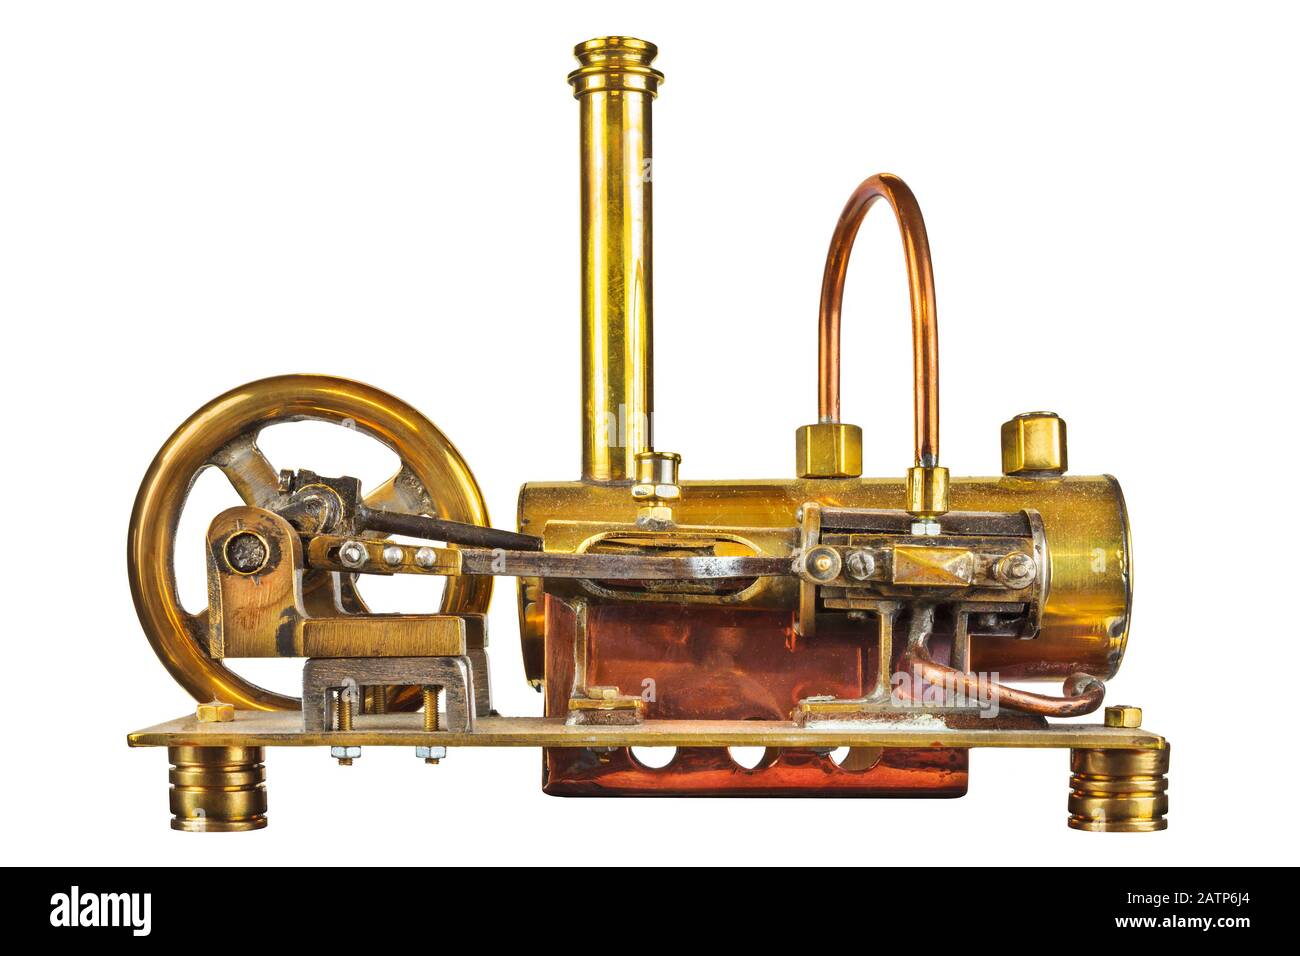 Maquina de vapor revolucion industrial fotografías e imágenes de alta resolución - 2 -